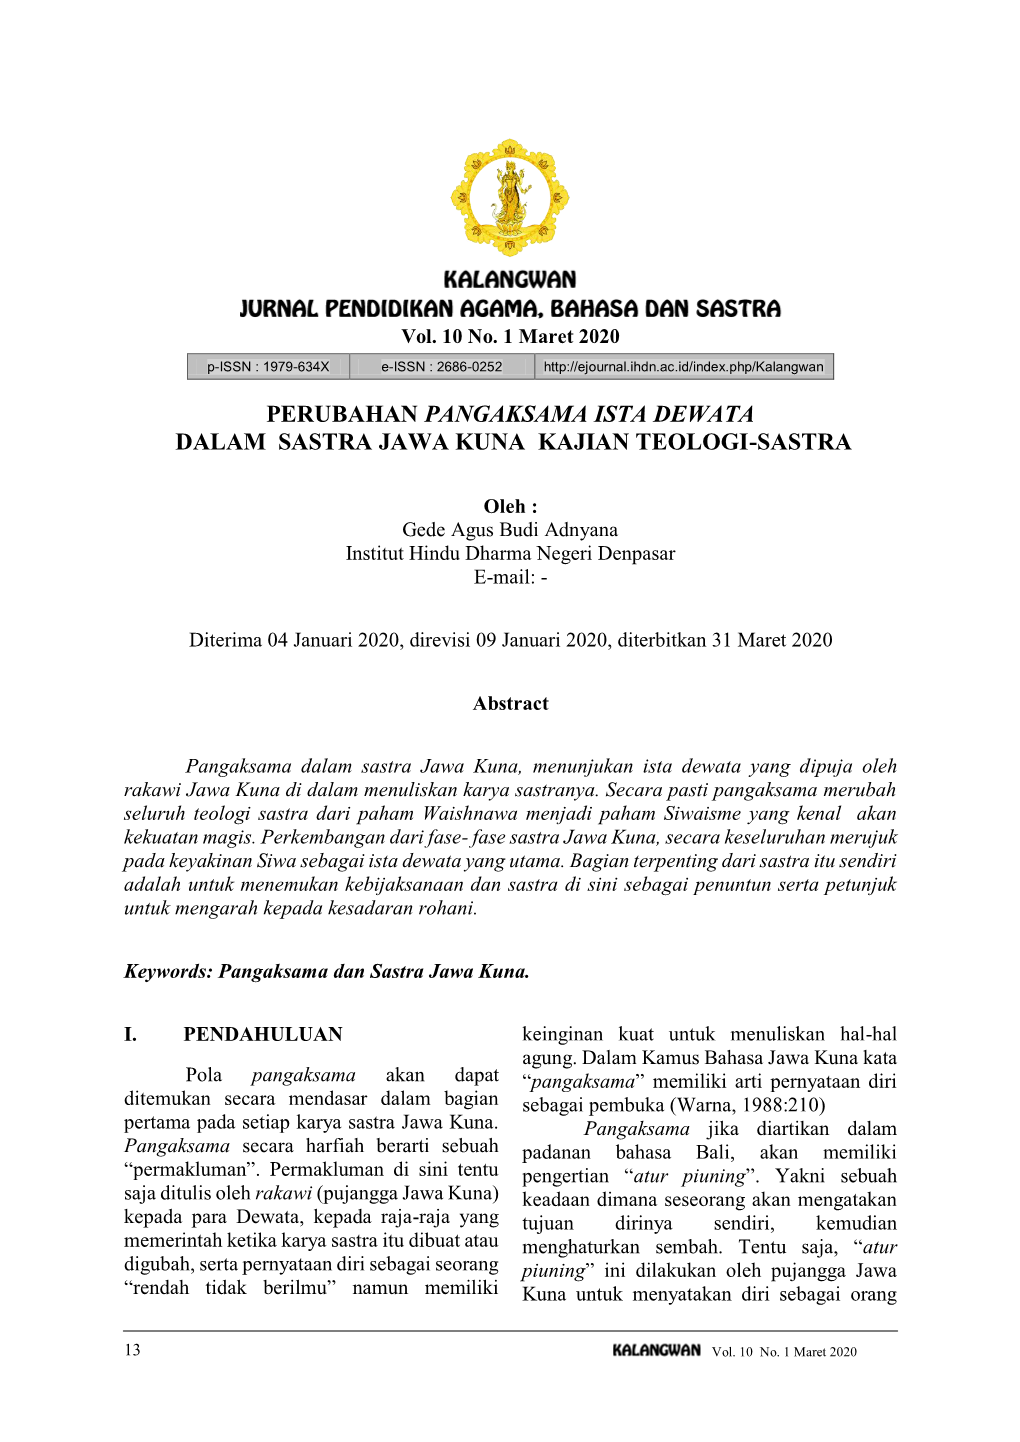 Perubahan Pangaksama Ista Dewata Dalam Sastra Jawa Kuna Kajian Teologi-Sastra